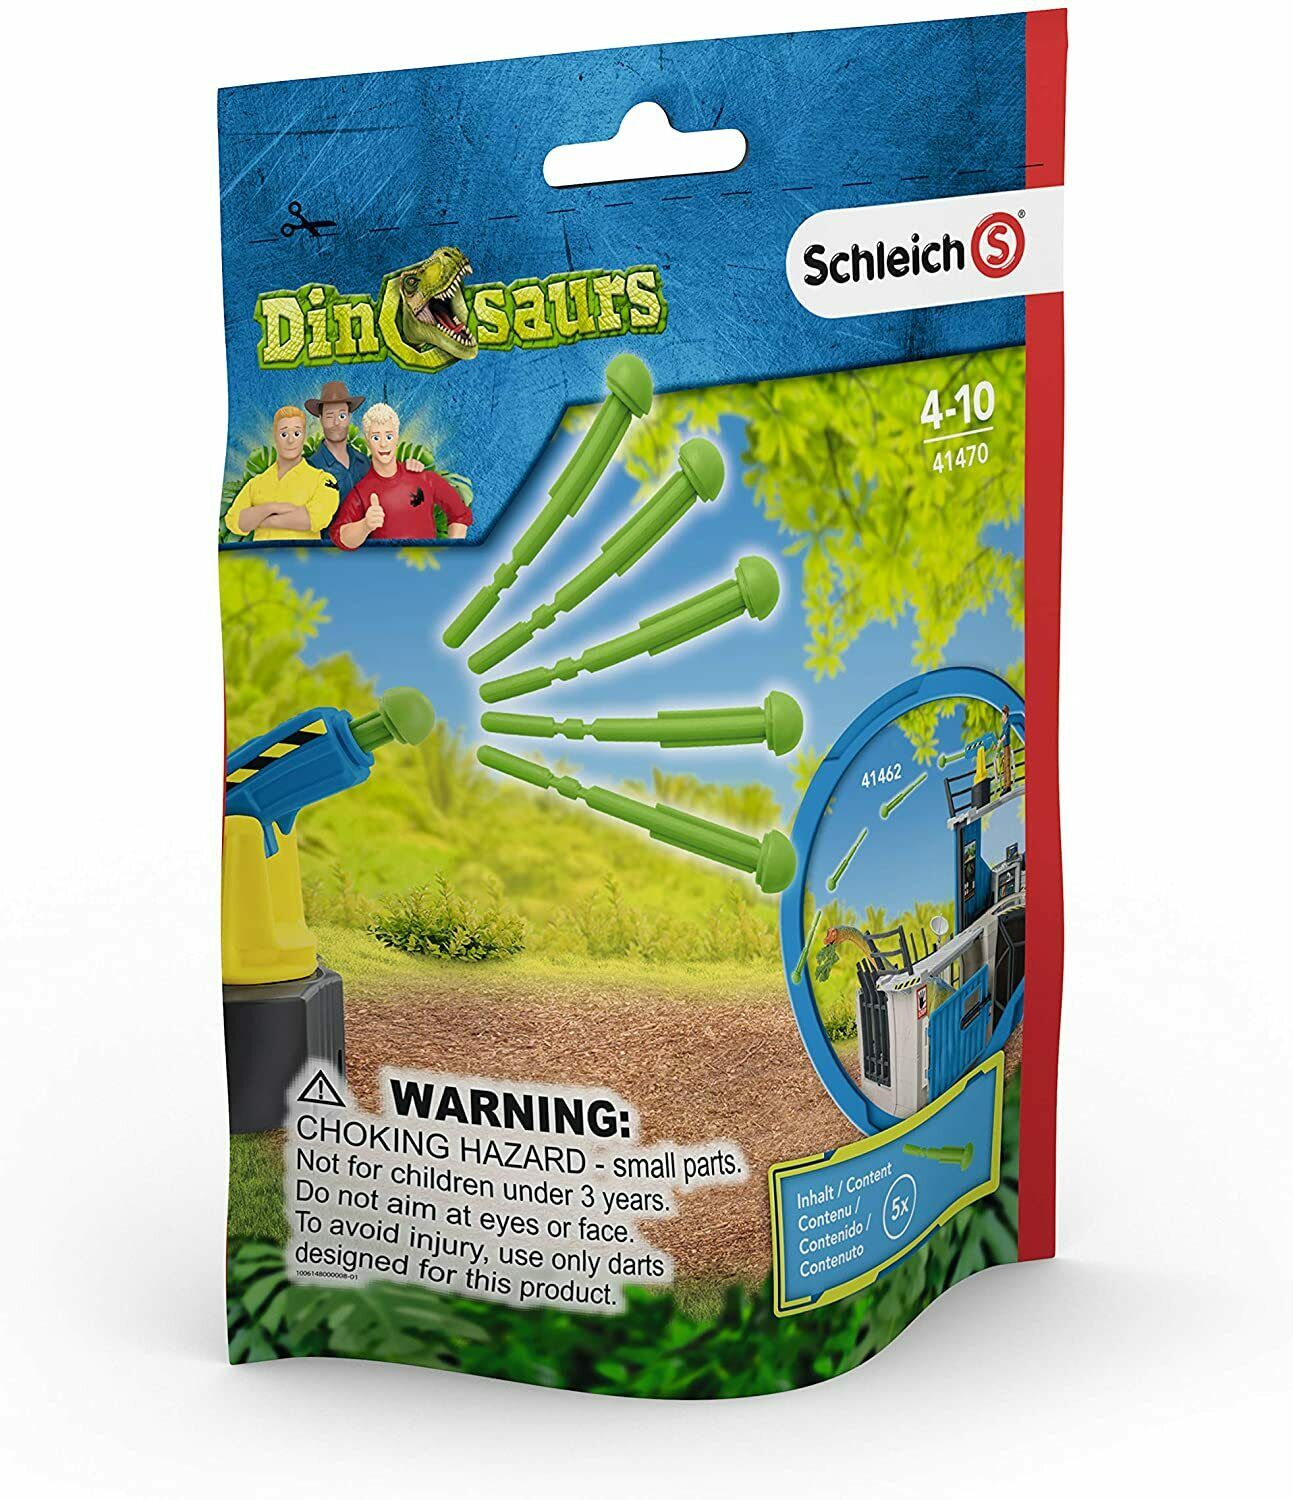 Schleich 41470 Dart Set Dinosaur Accessory Set includes x5 Darts Age 3 Years+